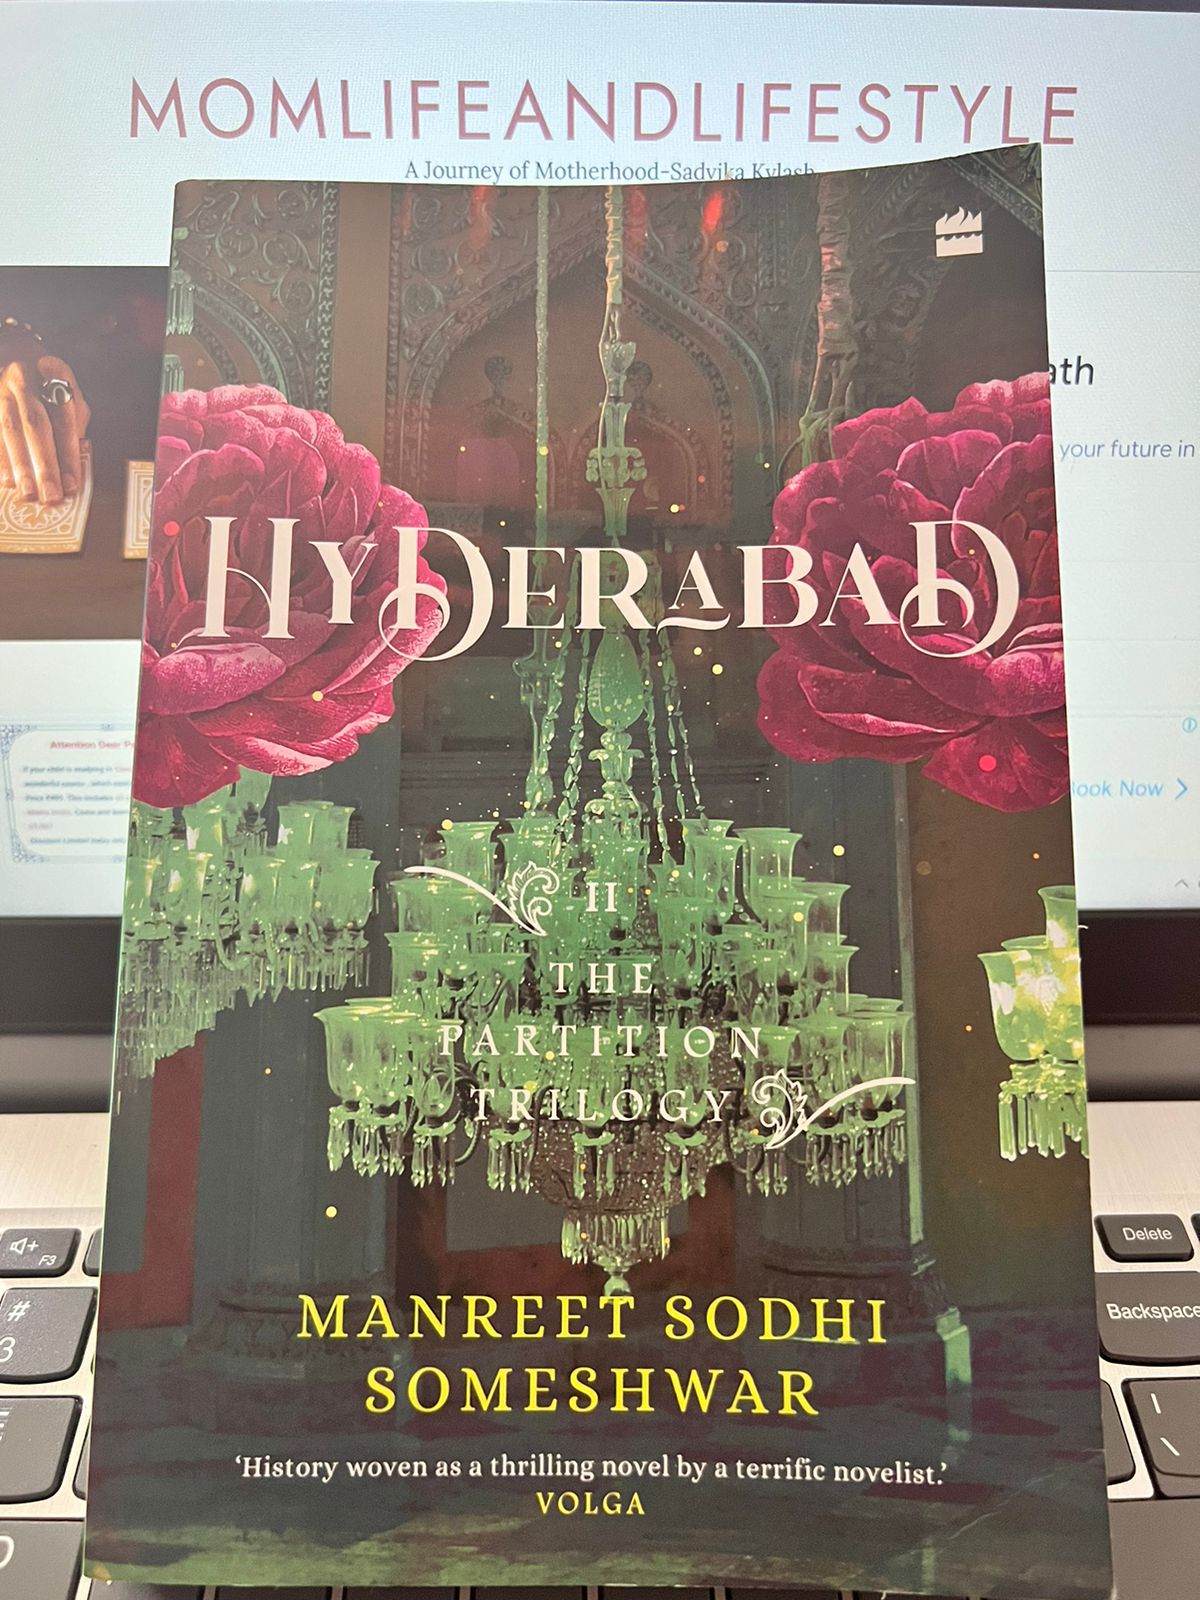 Hyderabad. II. The Partition Trilogy by Manreet Sodhi Someshwar. Book revi ew by Sadvika Kylash